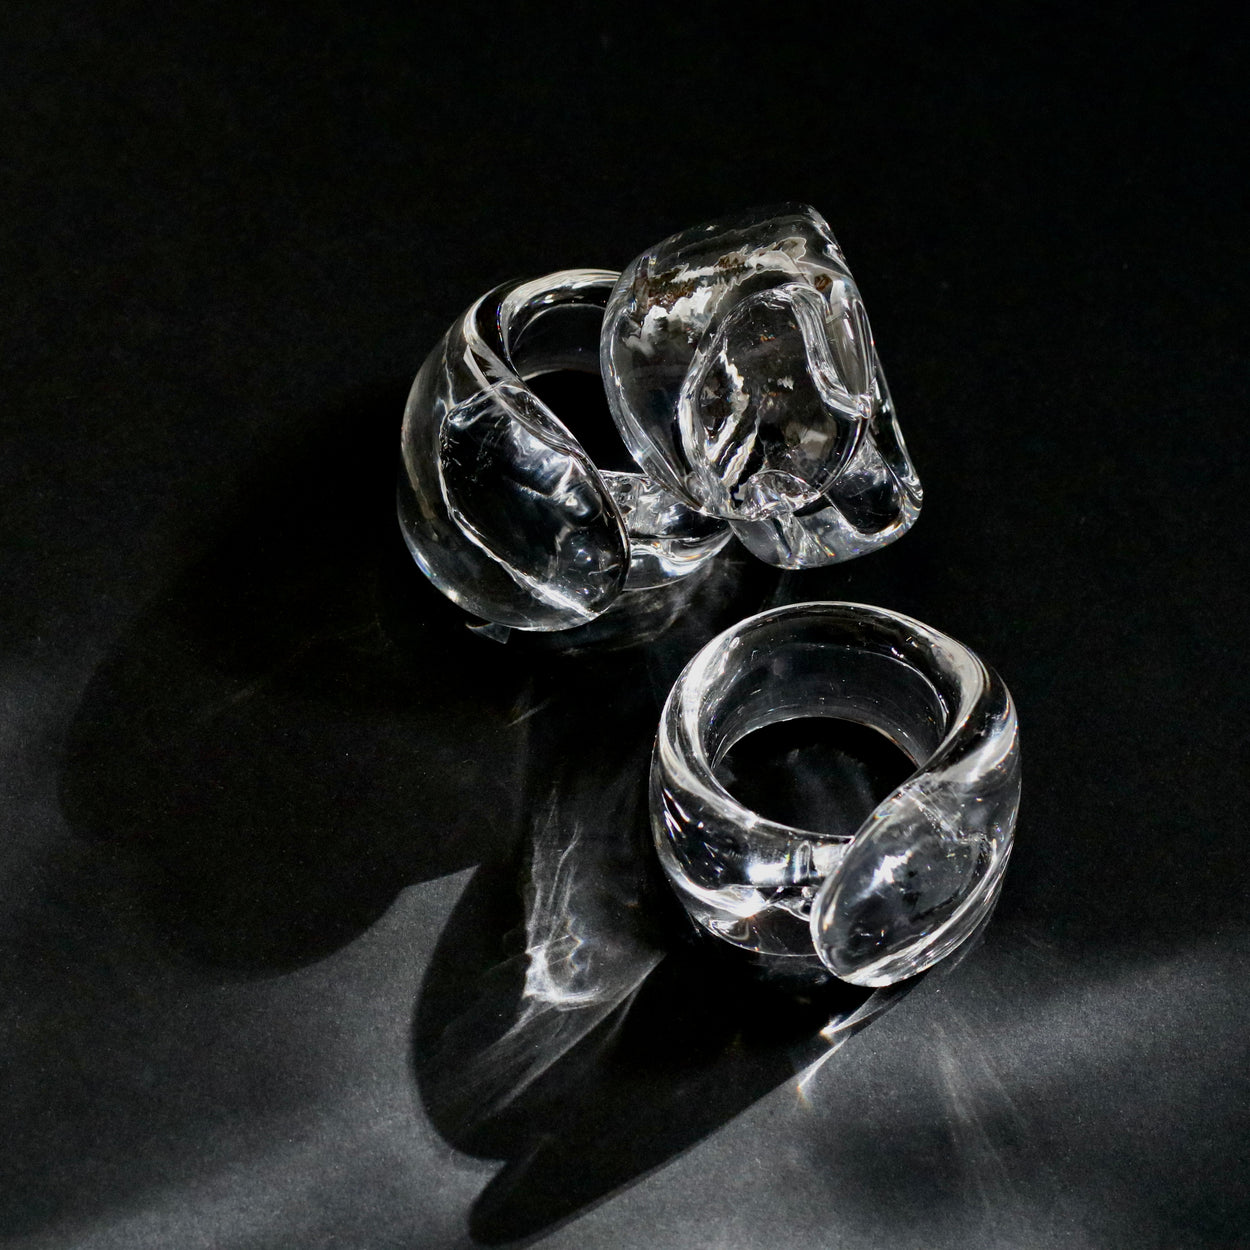 Vintage handmade glass napkin rings against a black background.